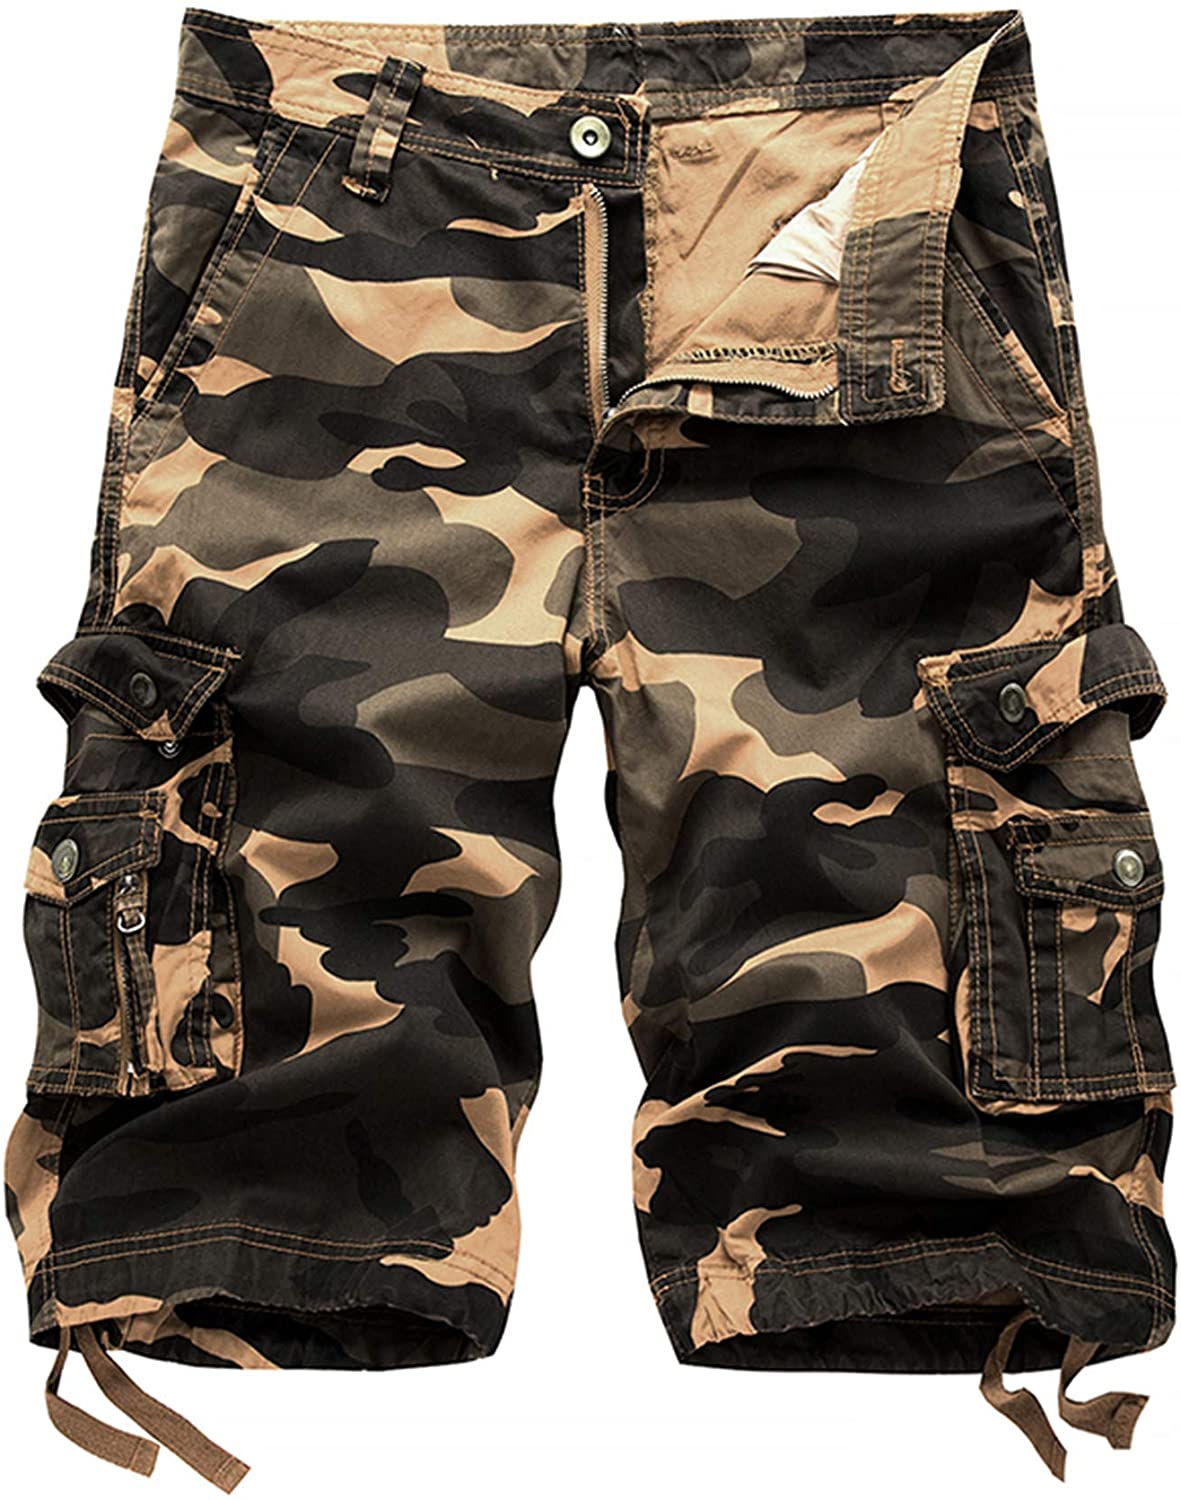 AOYOG Men's Camo Cargo Shorts Relaxed Fit Multi-Pocket Outdoor Camouflage Cargo Shorts Cotton 